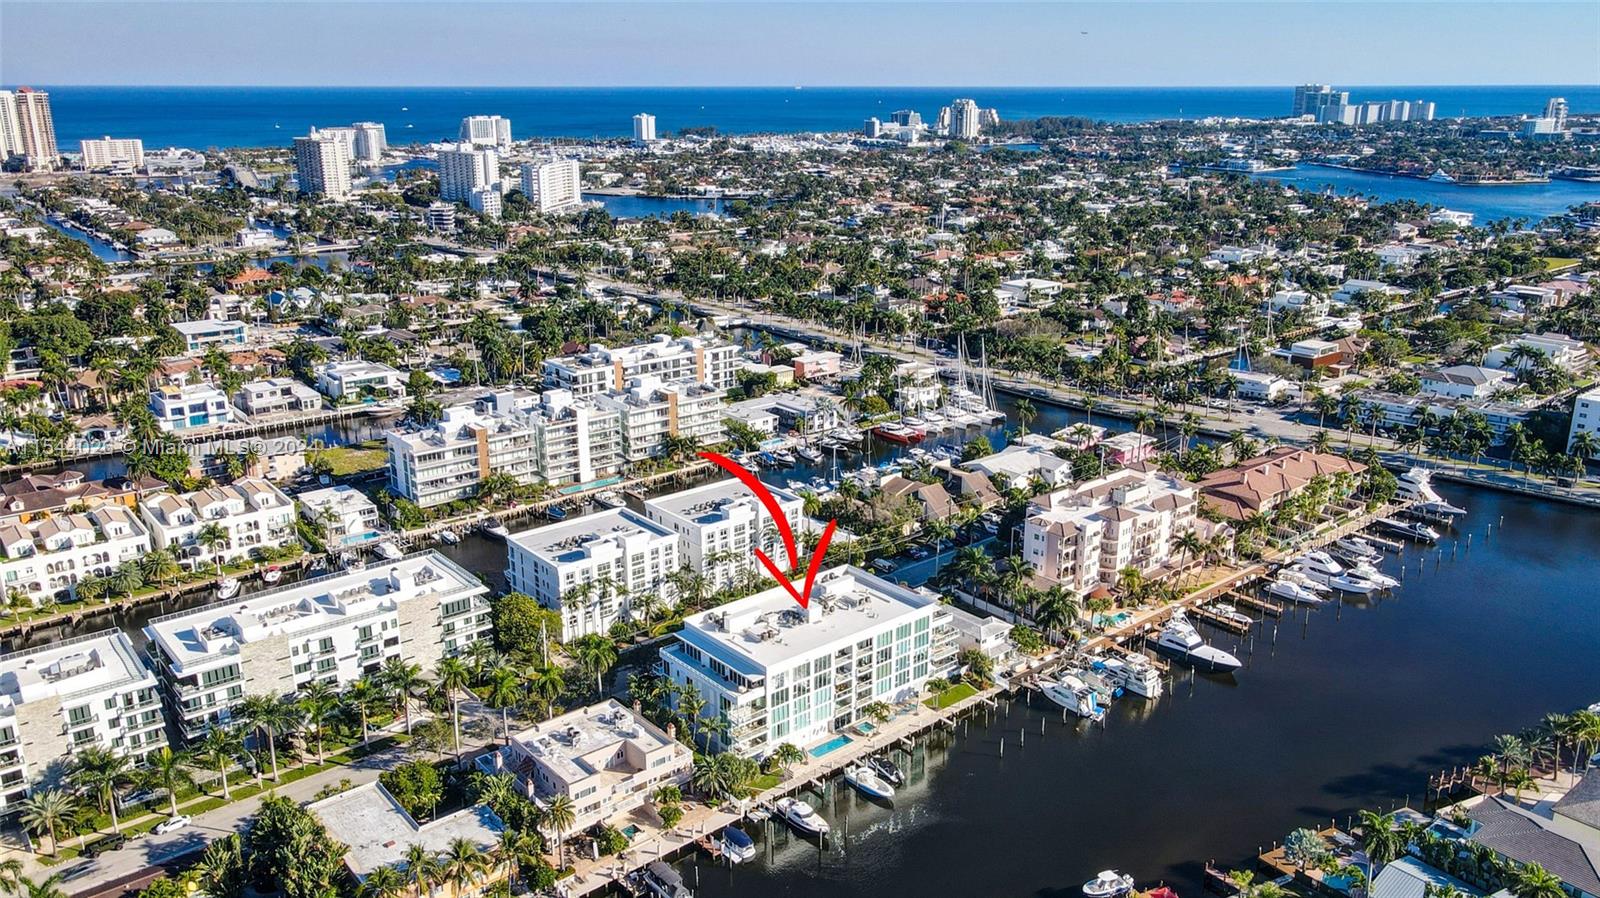 Rental Property at 45 Hendricks Isle Isle 404, Fort Lauderdale, Broward County, Florida - Bedrooms: 3 
Bathrooms: 4  - $10,500 MO.